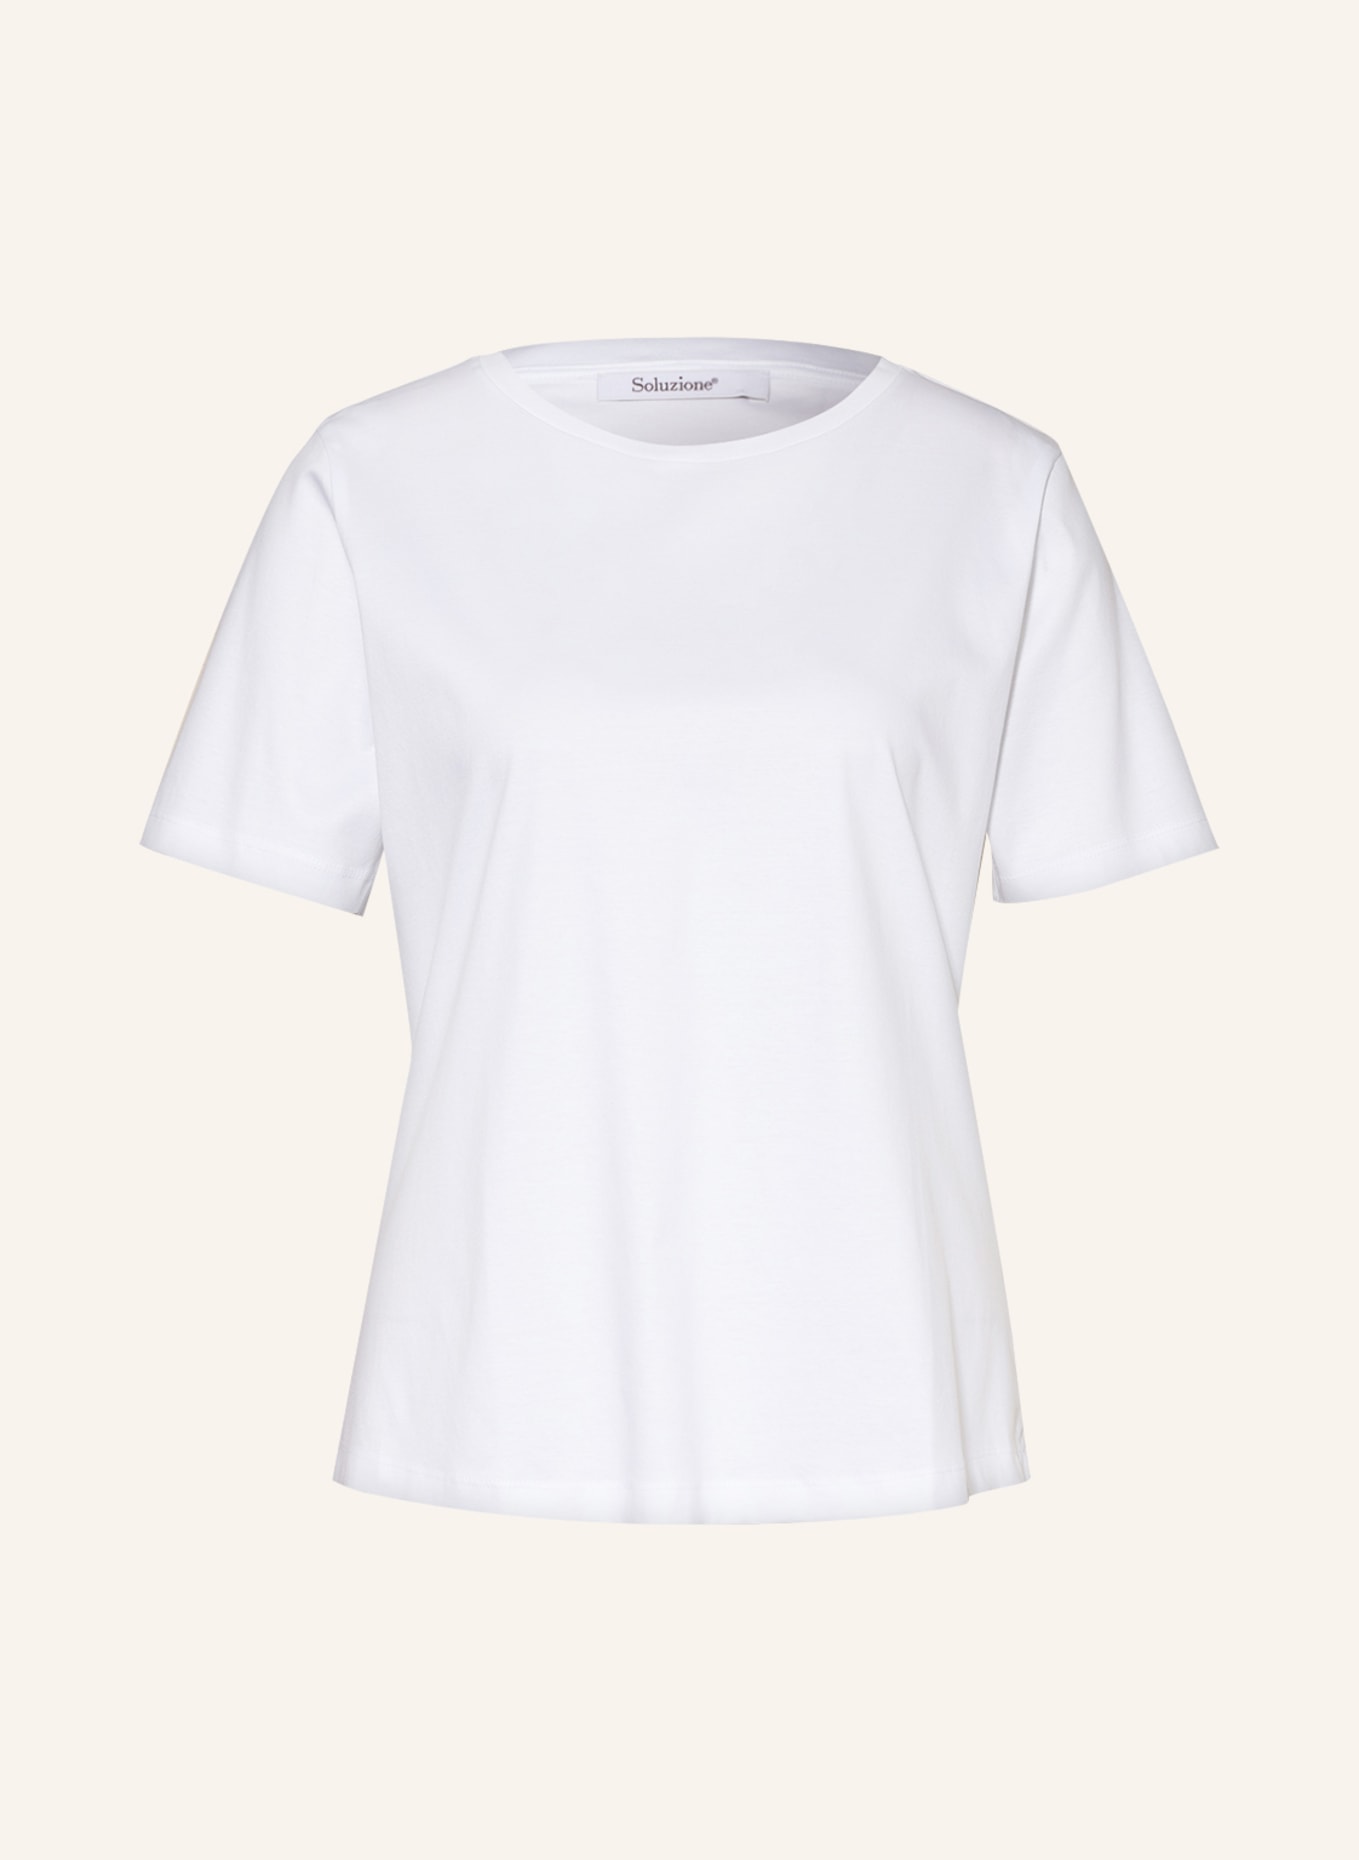 Soluzione T-Shirt, Farbe: WEISS (Bild 1)